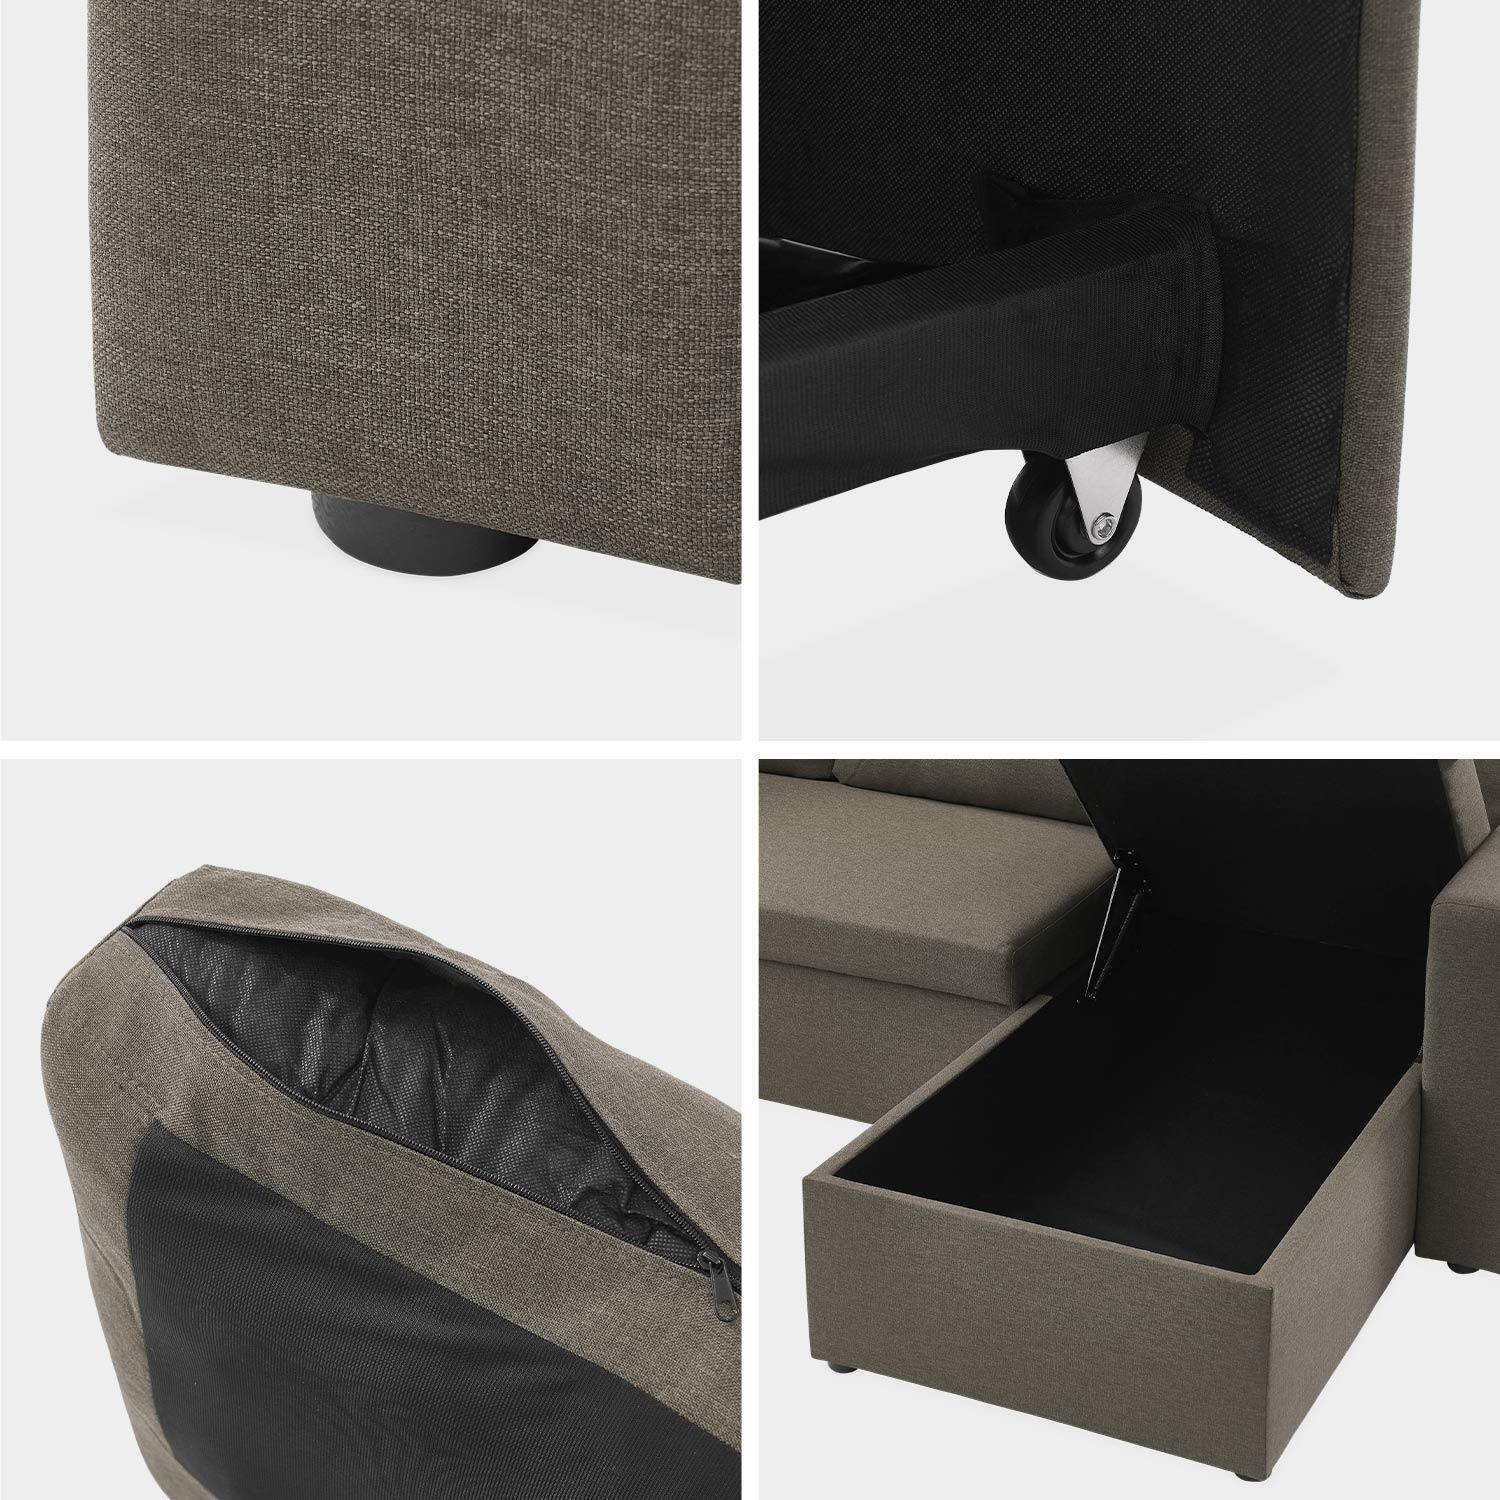 3-seater reversible brown corner sofa bed with storage box, brown, L219xD81xH68cm, IDA,sweeek,Photo10